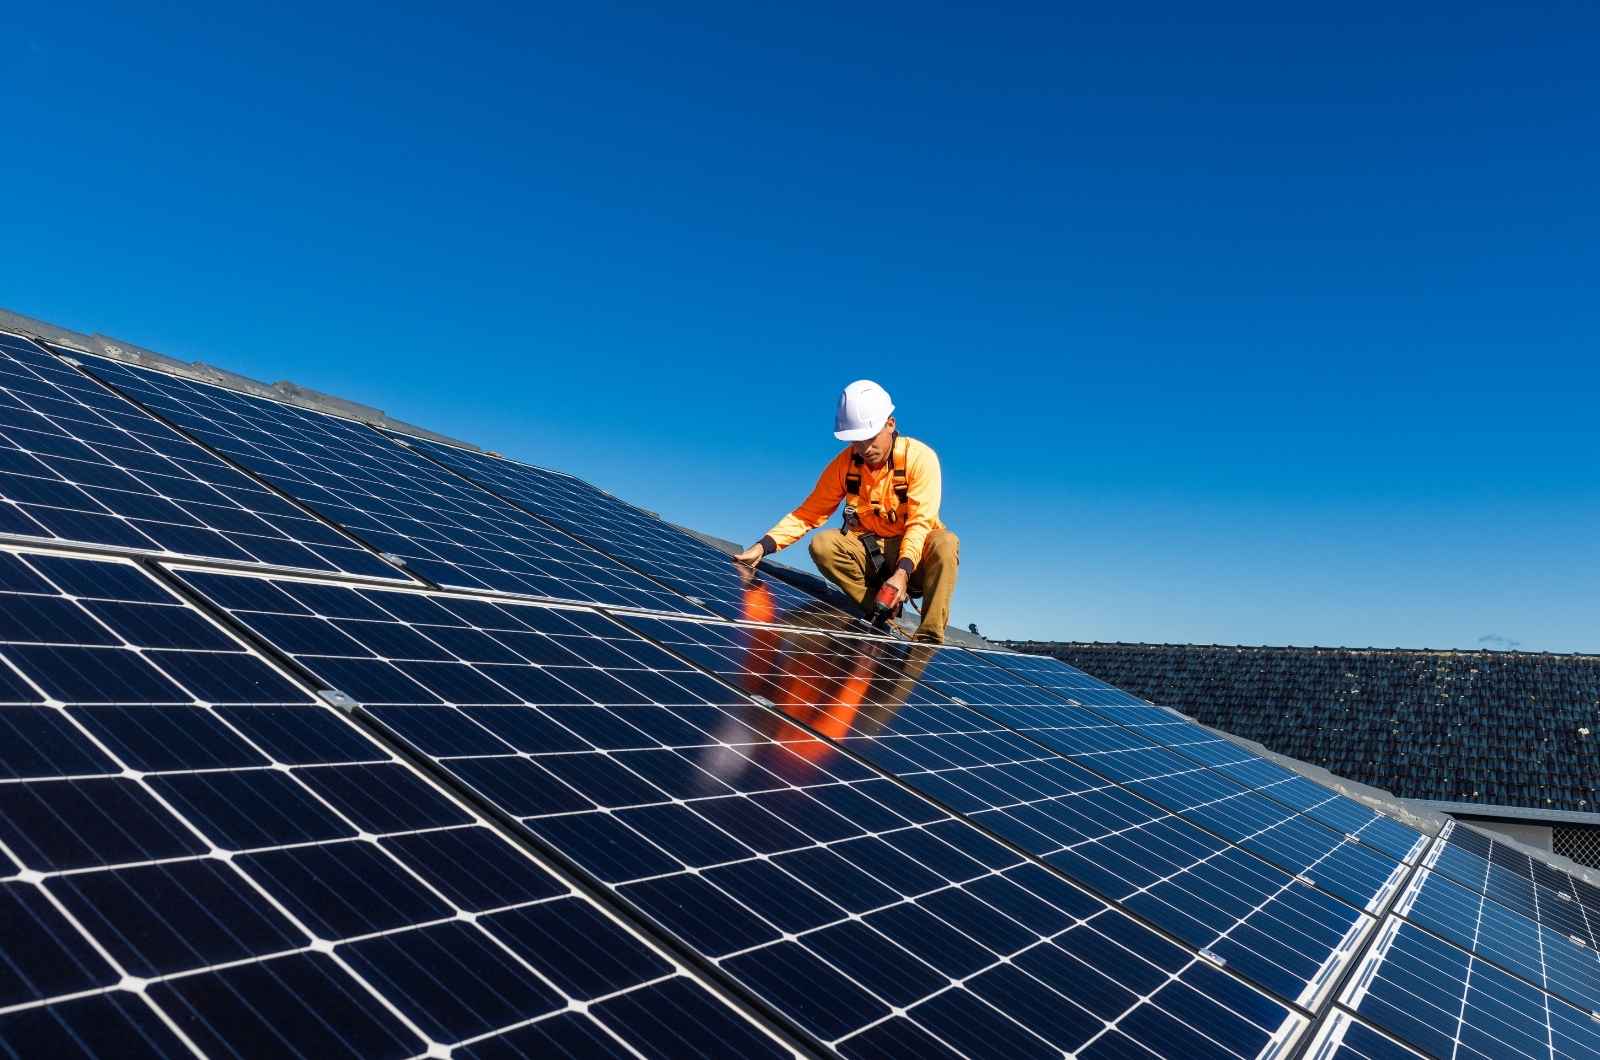 OGC אנרגיה: חלוצים בשירותי אנרגיה סולארית מקצועיים